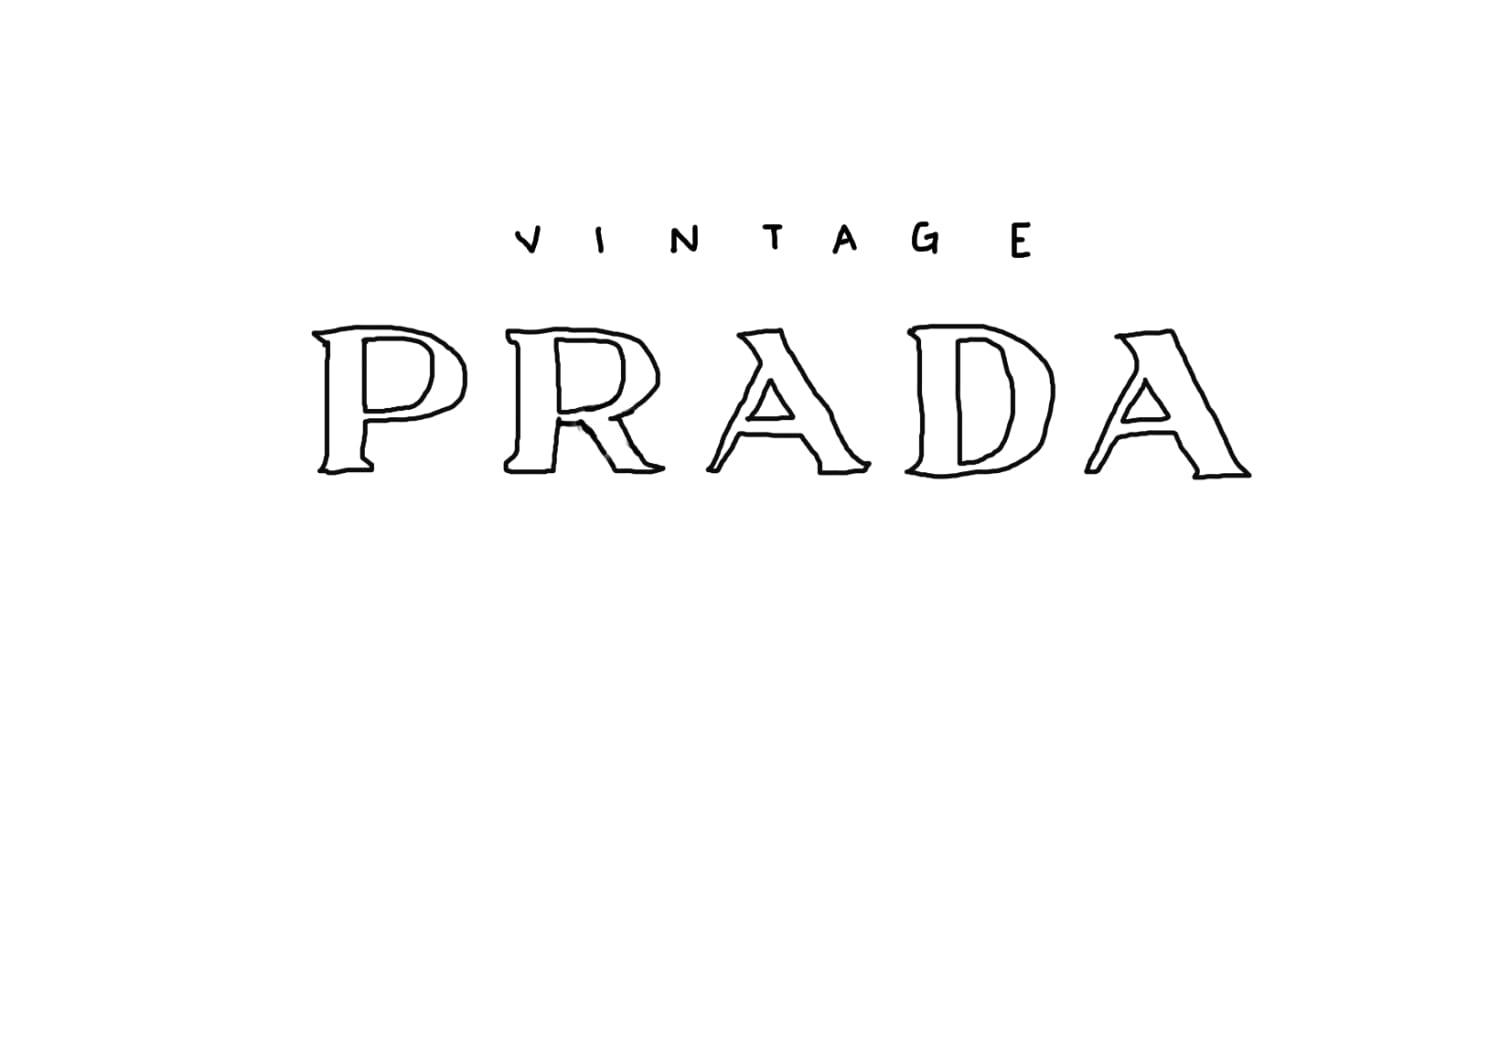 Vintage Prada Light Pink Mini Ring Handle Bag – Treasures of NYC